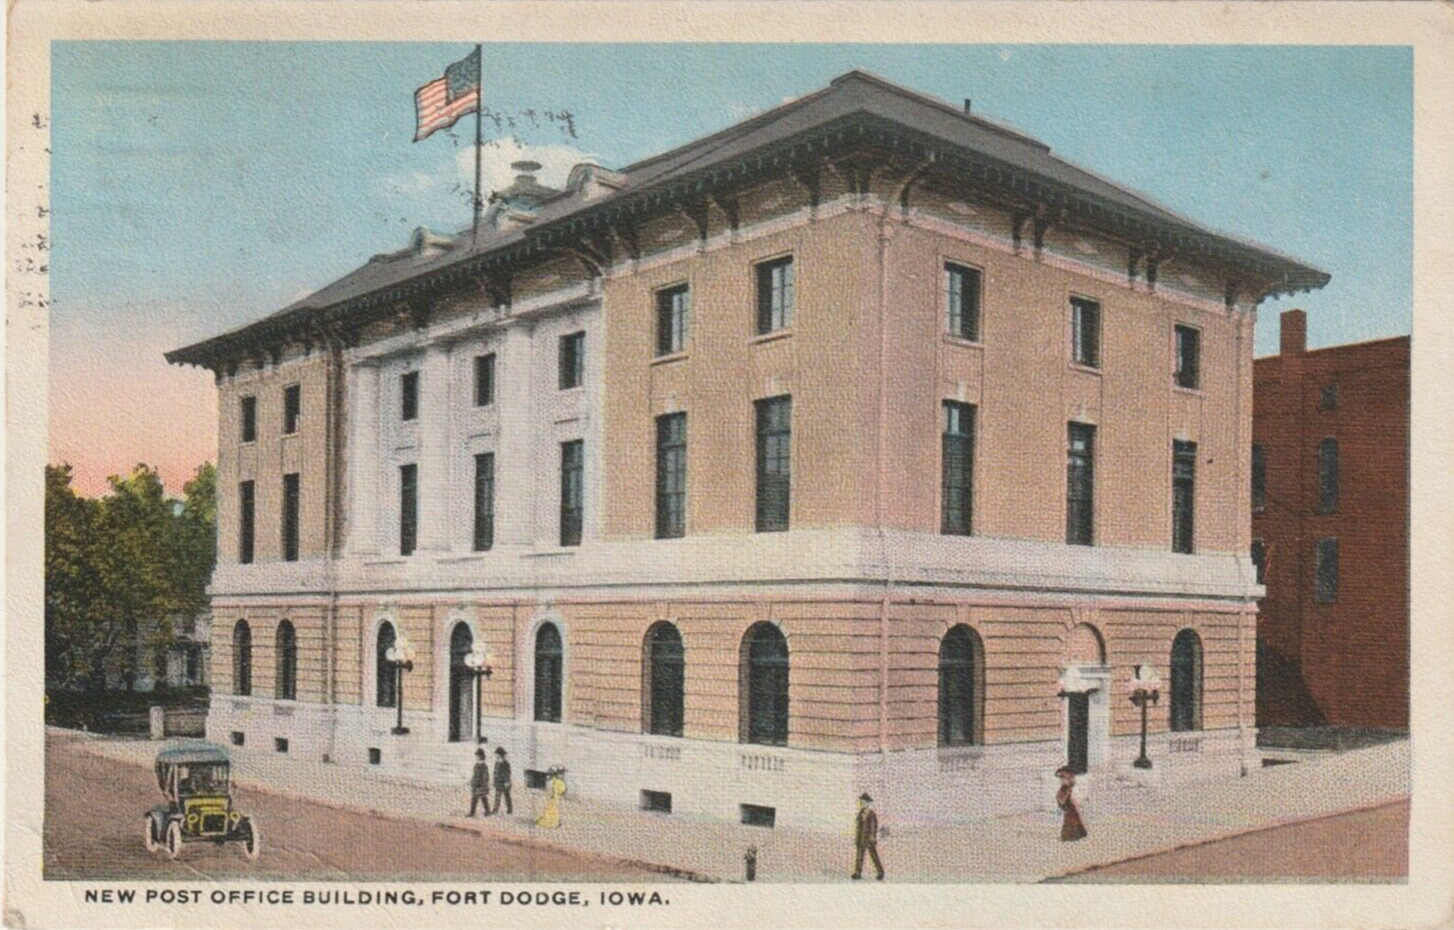 1915 FORT DODGE, IOWA POSTCARD New Post Office Building Vintage